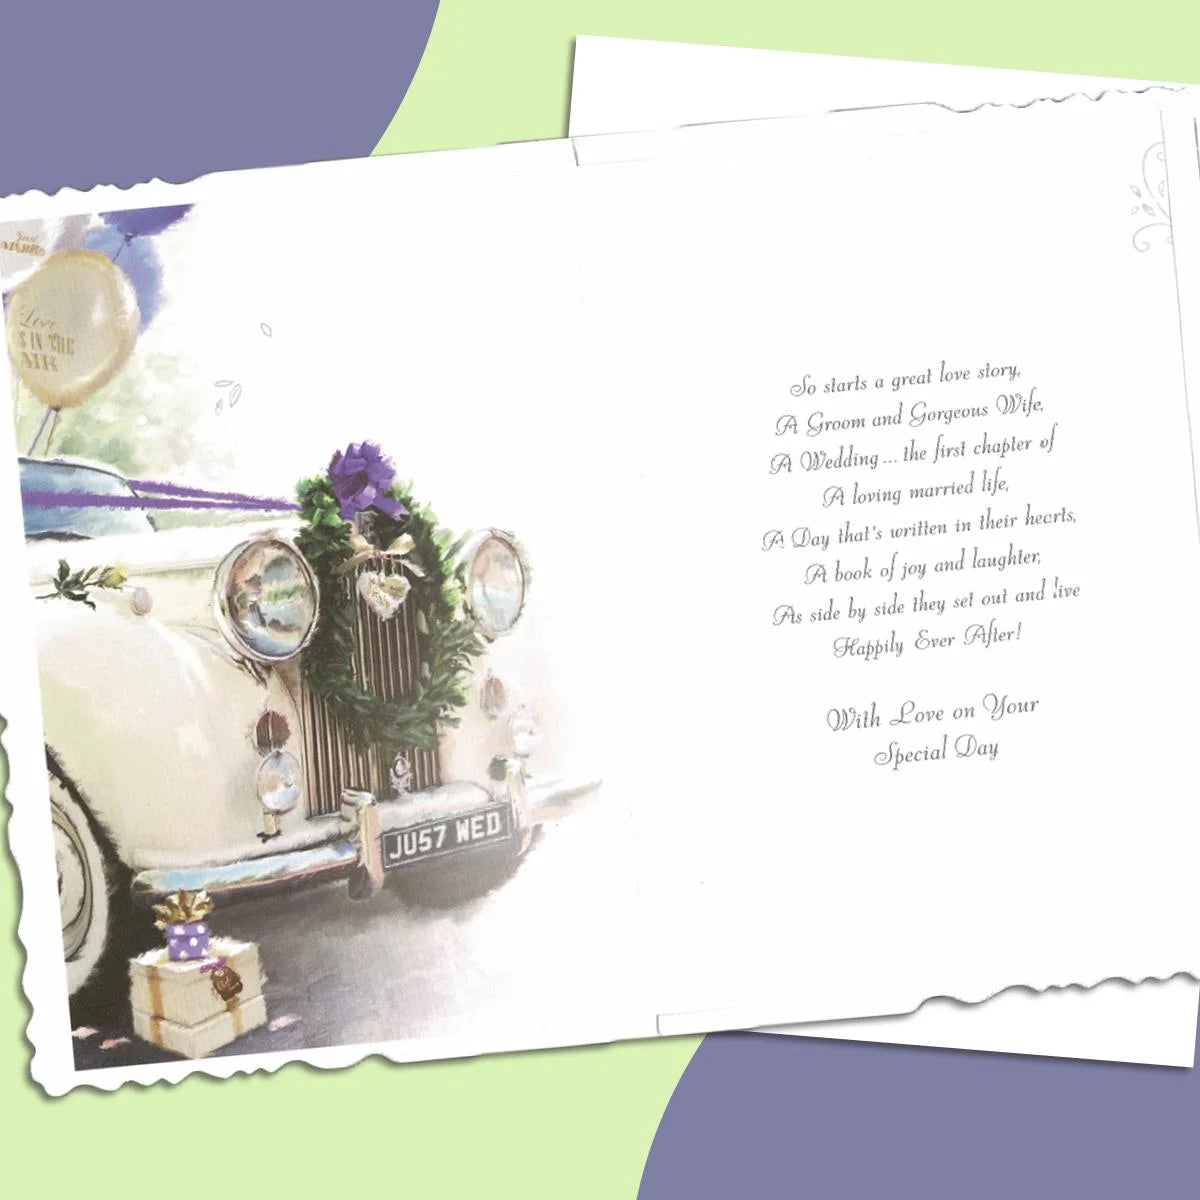 Brother & Sister-in-Law Wedding Day Card - Velvet Car